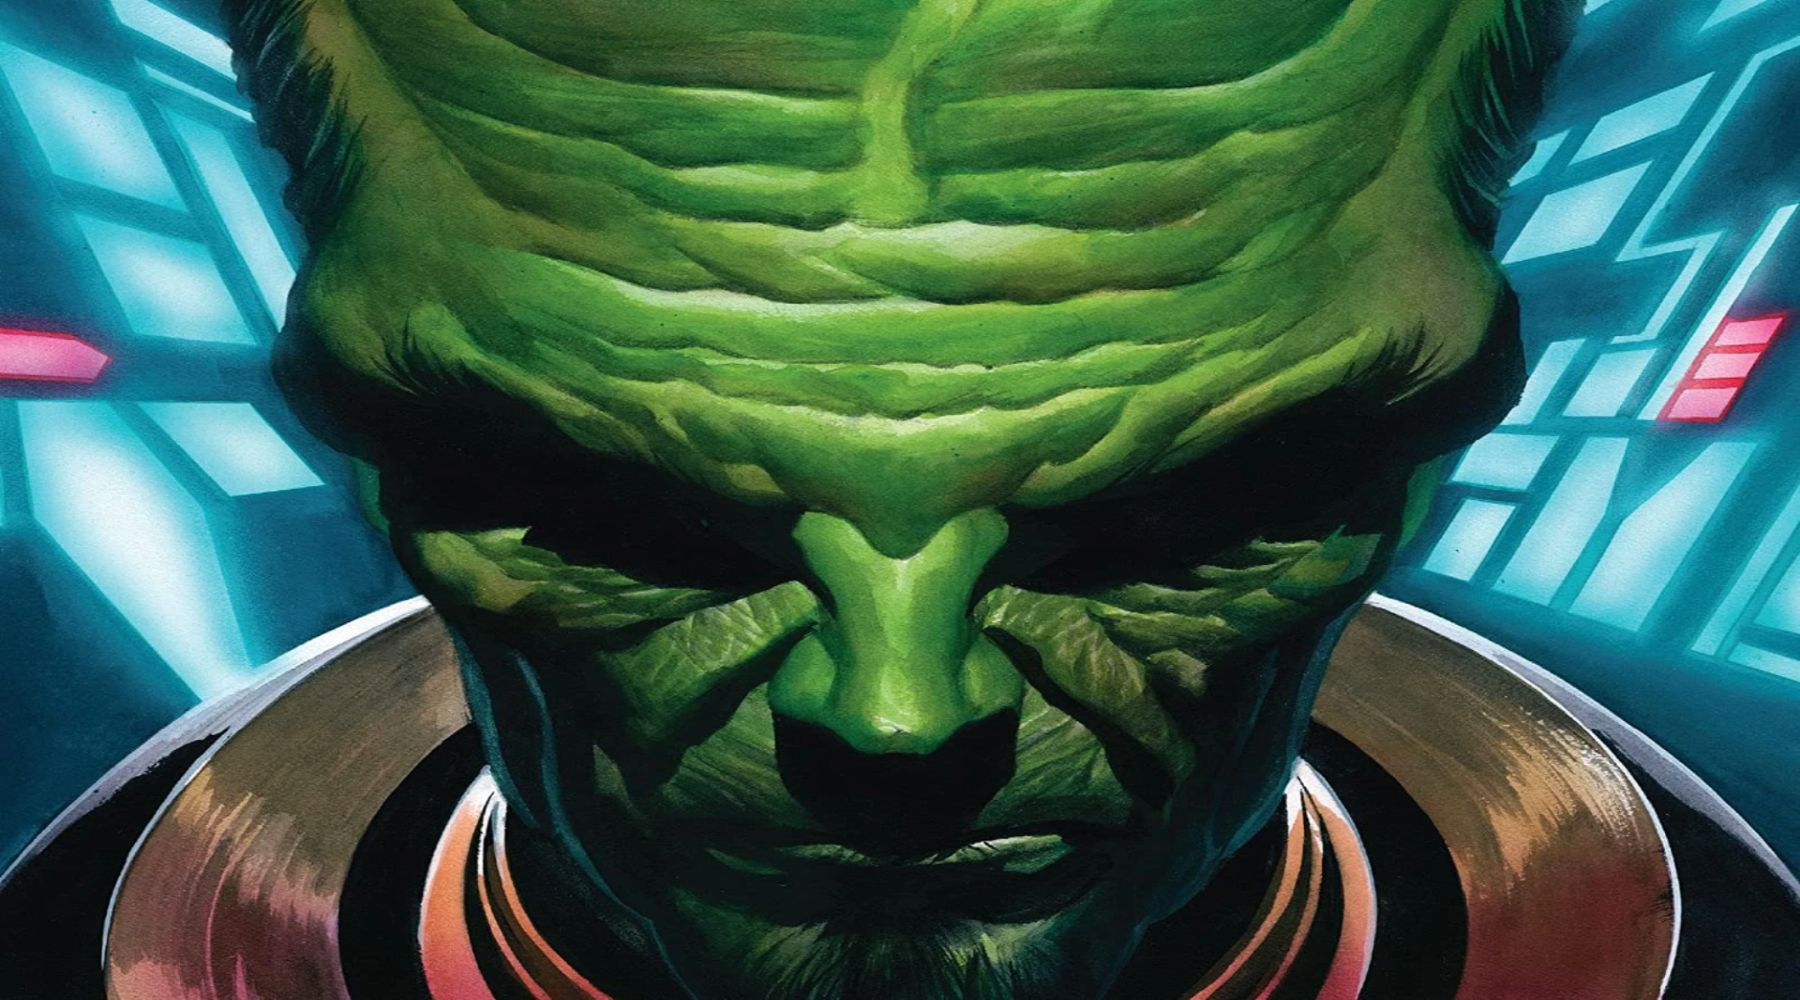 Marvel Leader Artwork From The Immortal Hulk 34 Comic Cover